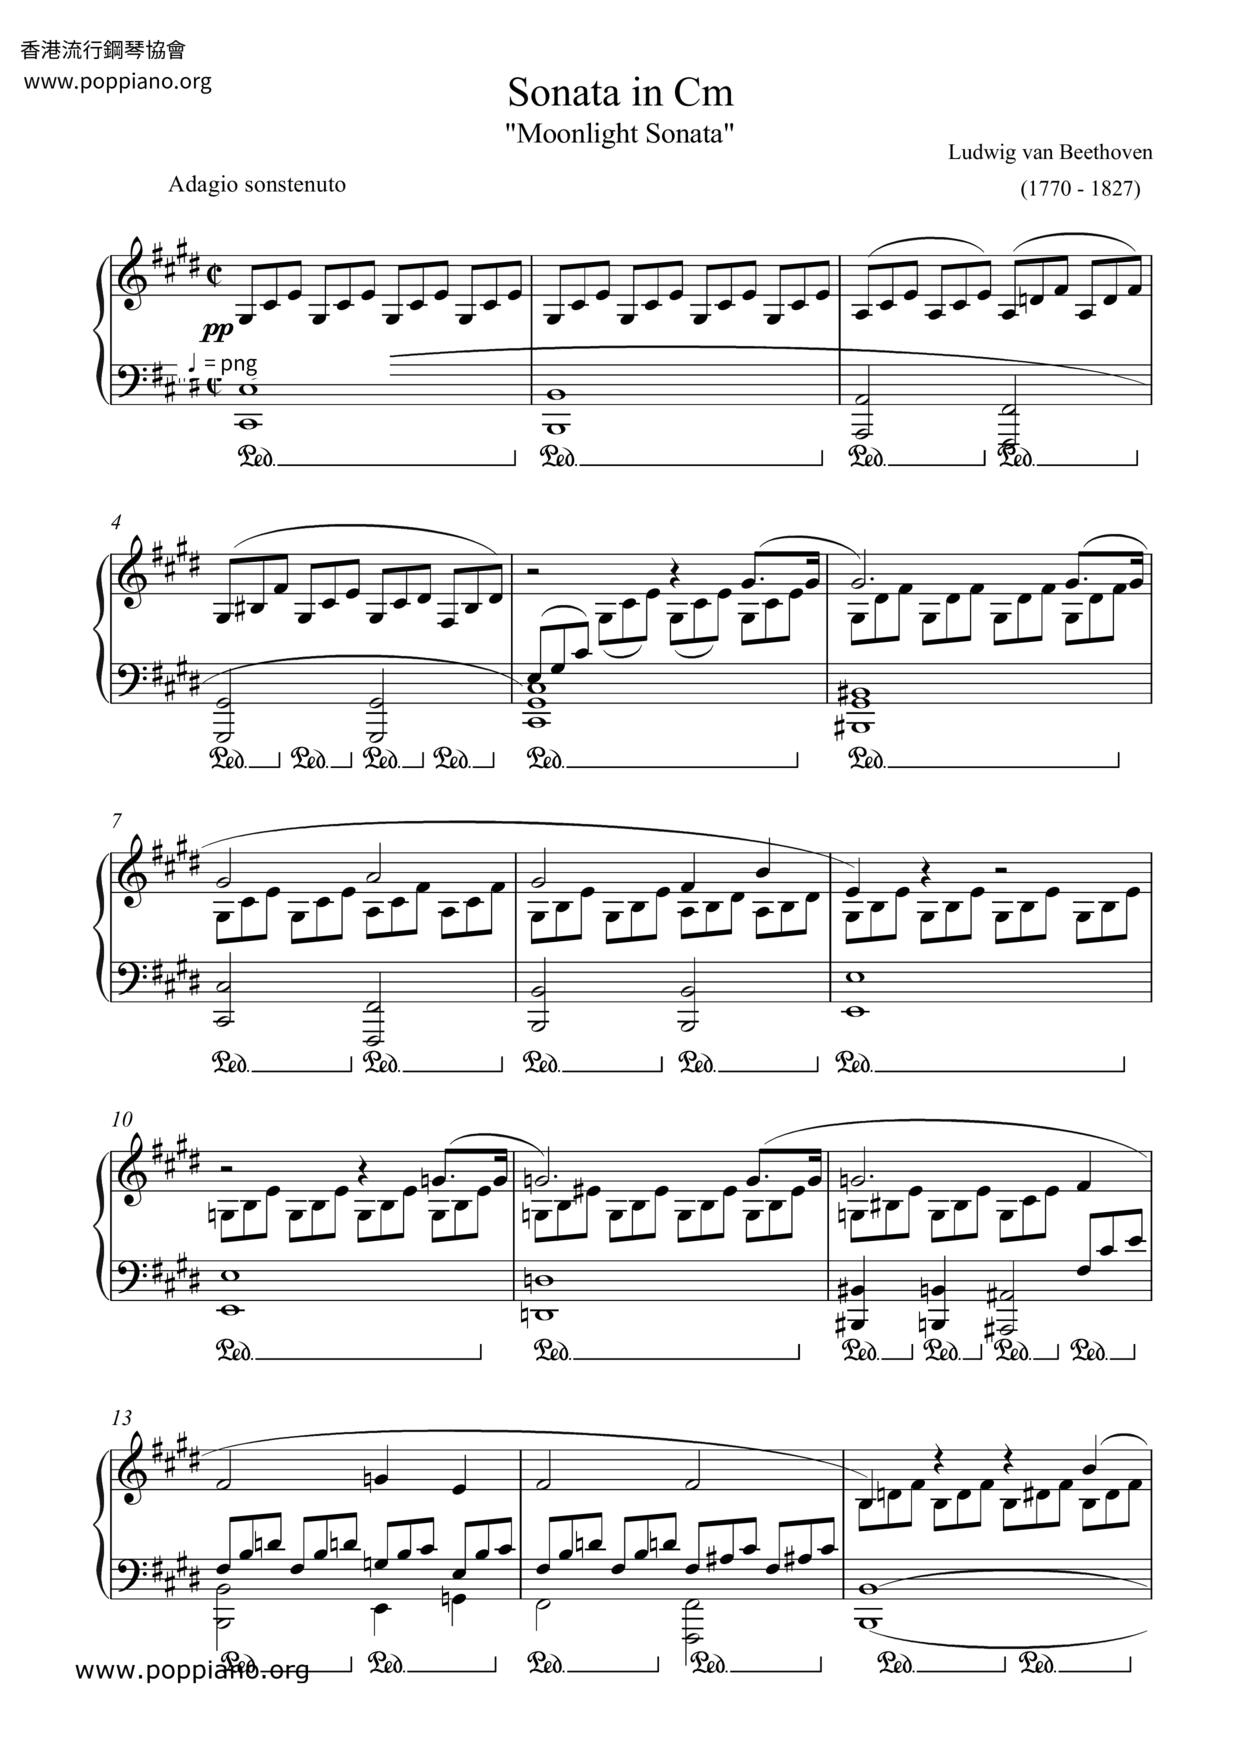 Sonata No. 14 Moonlight in C-Sharp Minor, Op. 27 No. 2: I. Adagio sostenuto琴譜